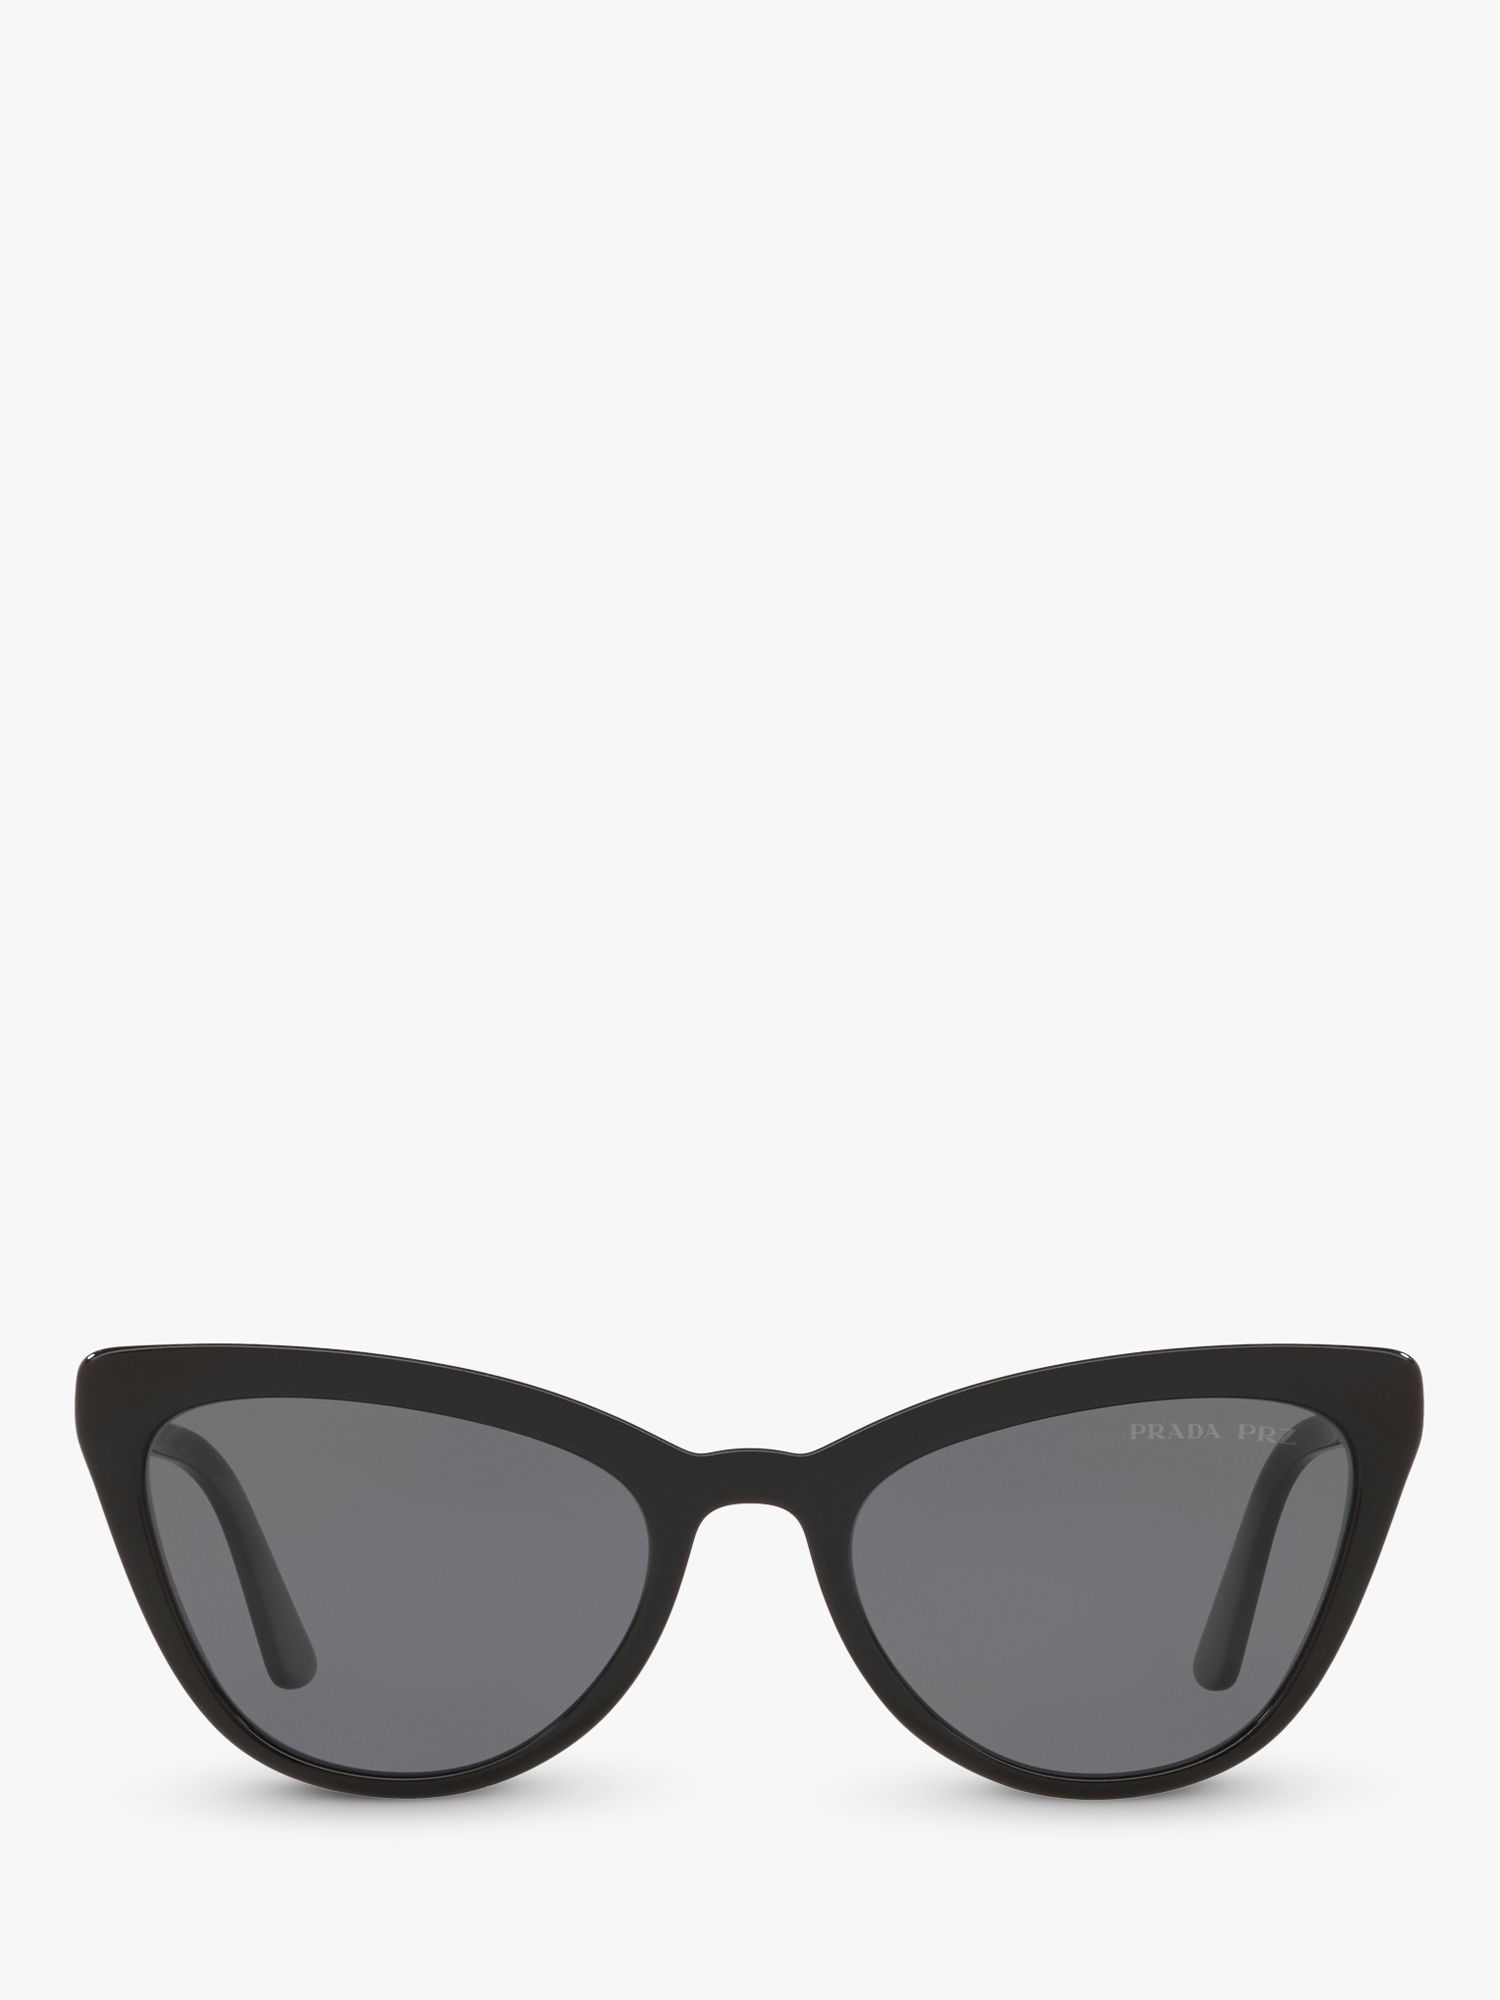 Prada PR 01VS Women's Polarised Cat's Eye Sunglasses, Black/Grey at John  Lewis & Partners